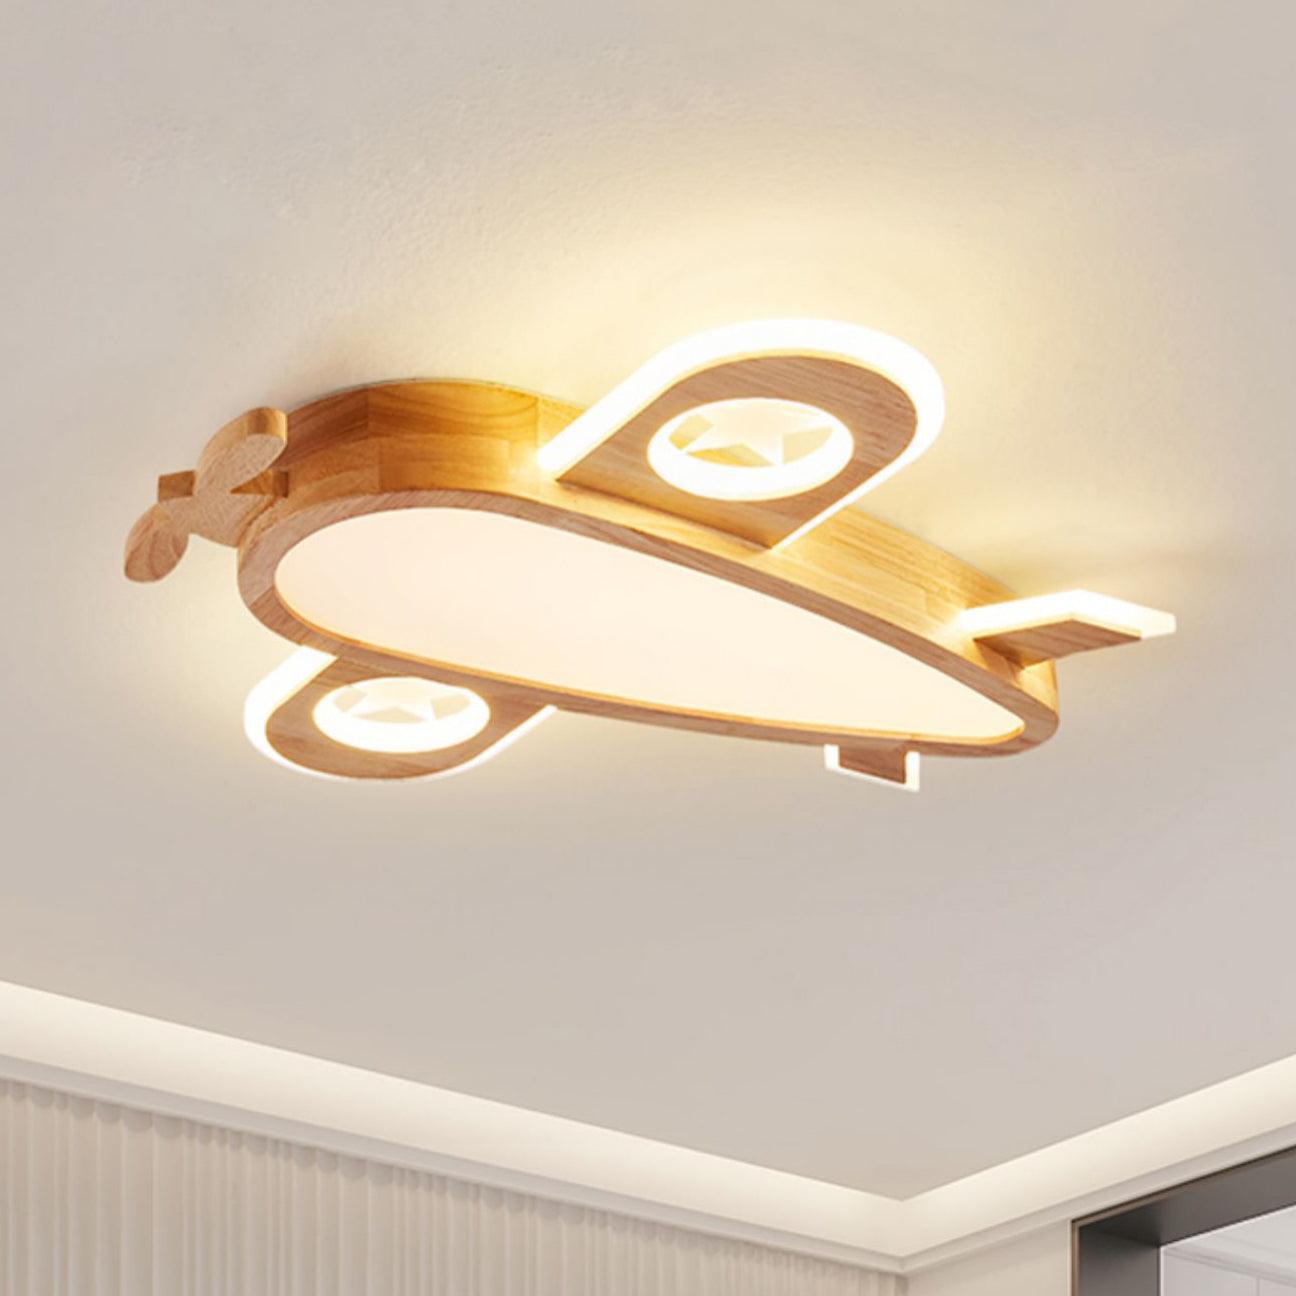 Wood Airplane Ceiling Lamp - Decormote